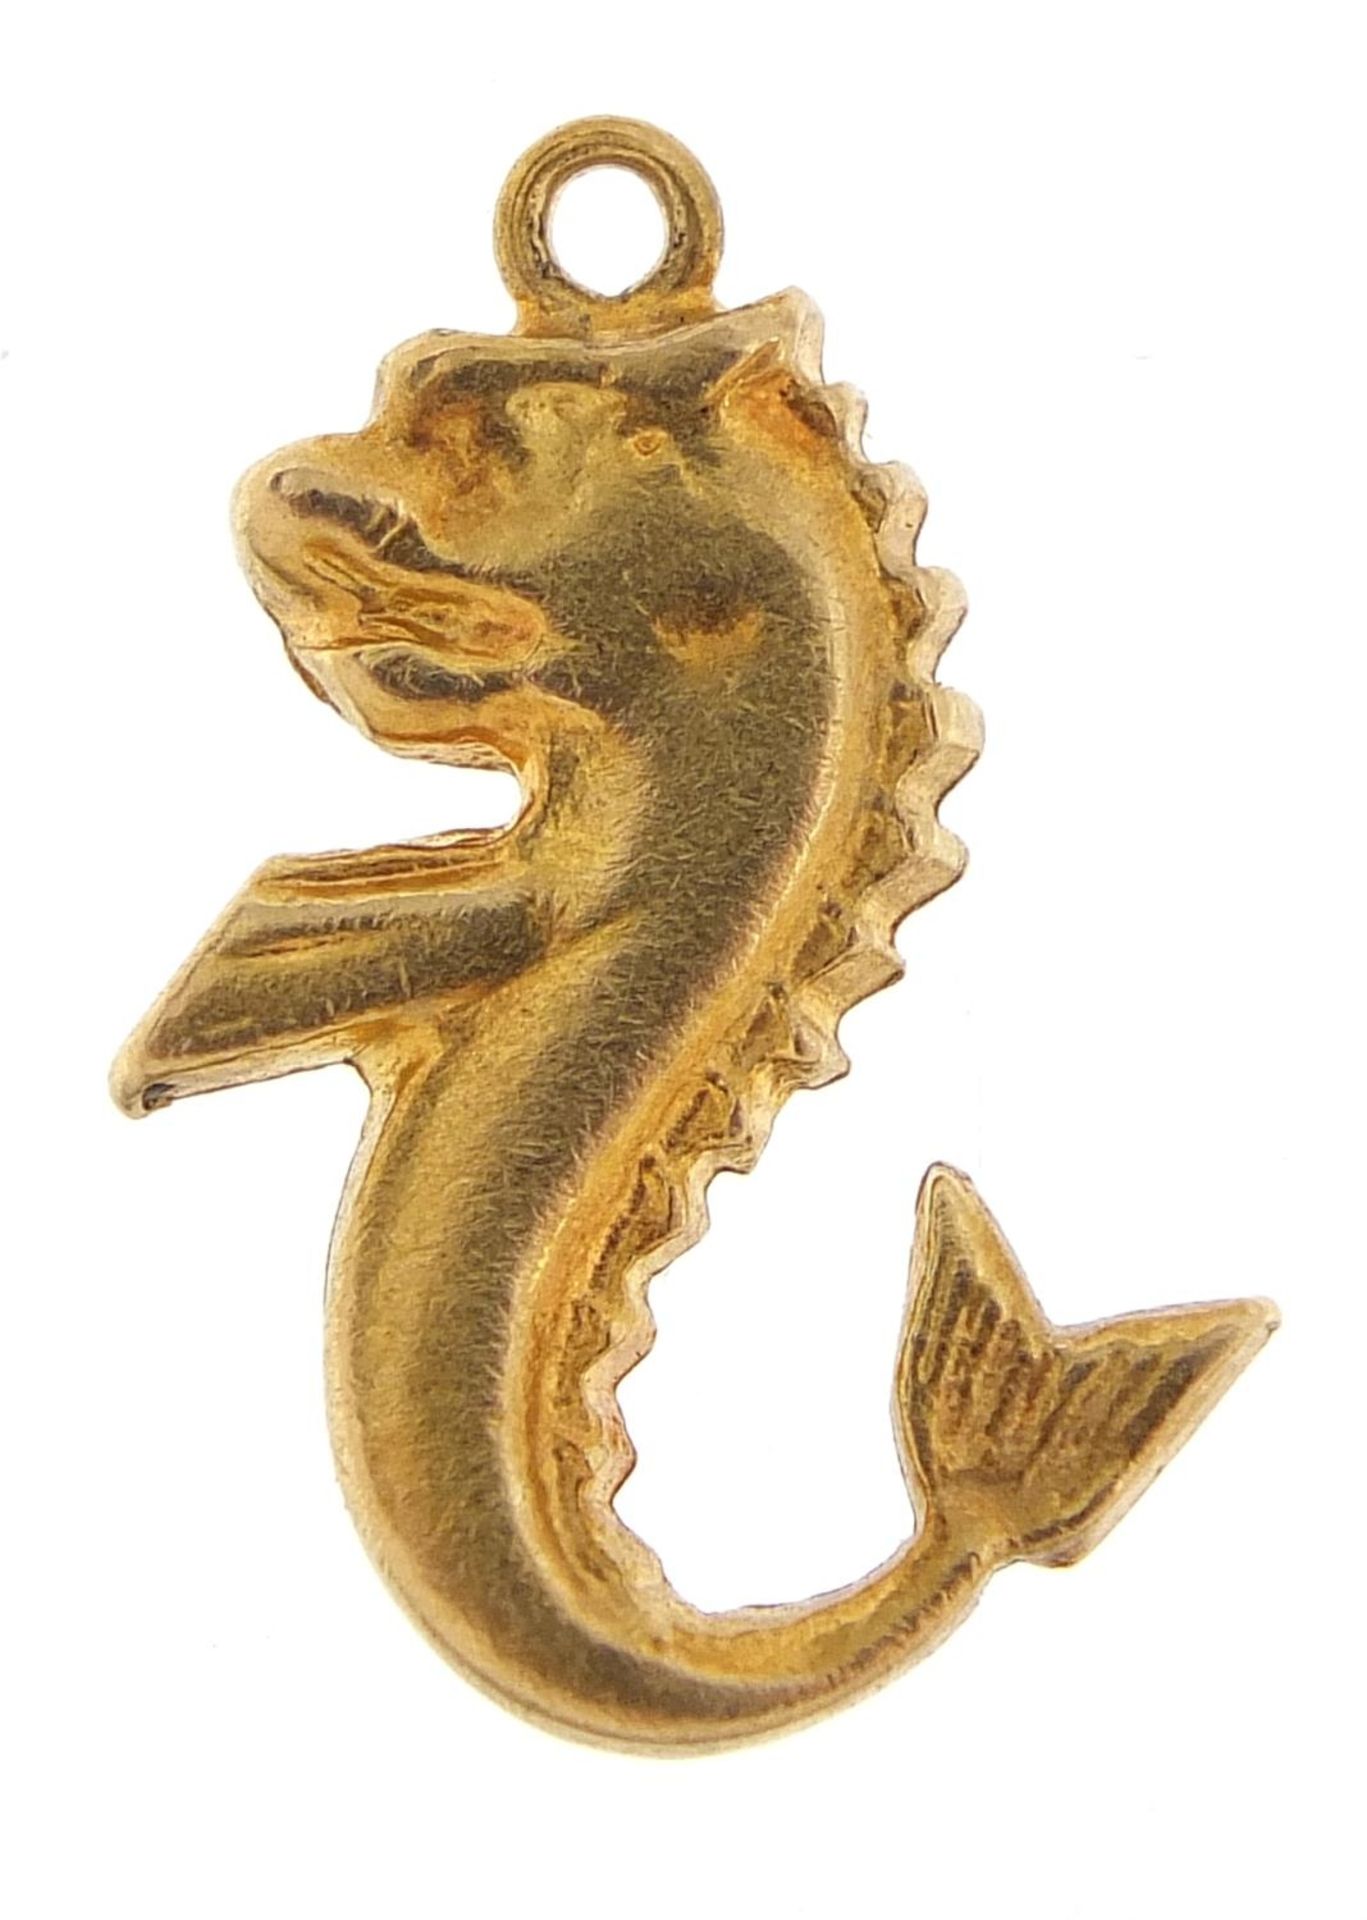 18ct gold mythical sea creature charm, 2.2cm high, 3.8g